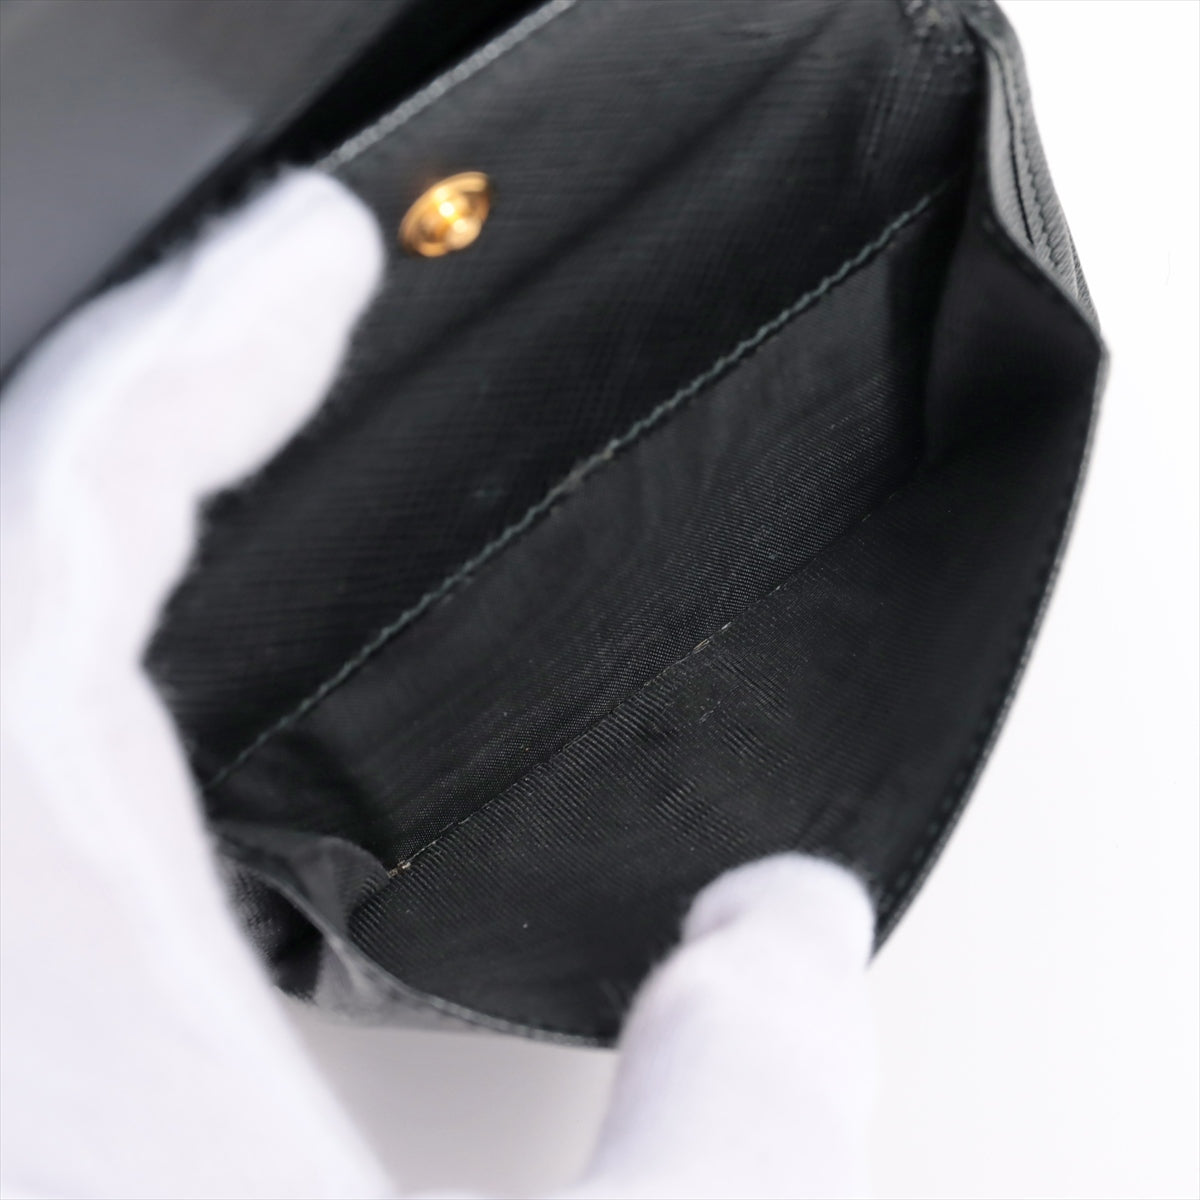 Prada Saffiano Metal 2MC122 Leather Wallet Black